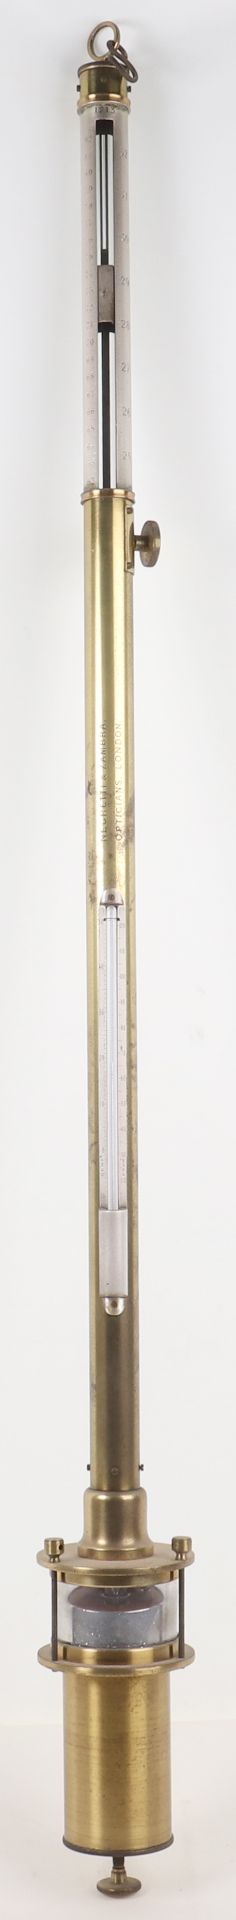 A 19th century brass marine or observatory barometer by Negretti & Zambra, No. 1213